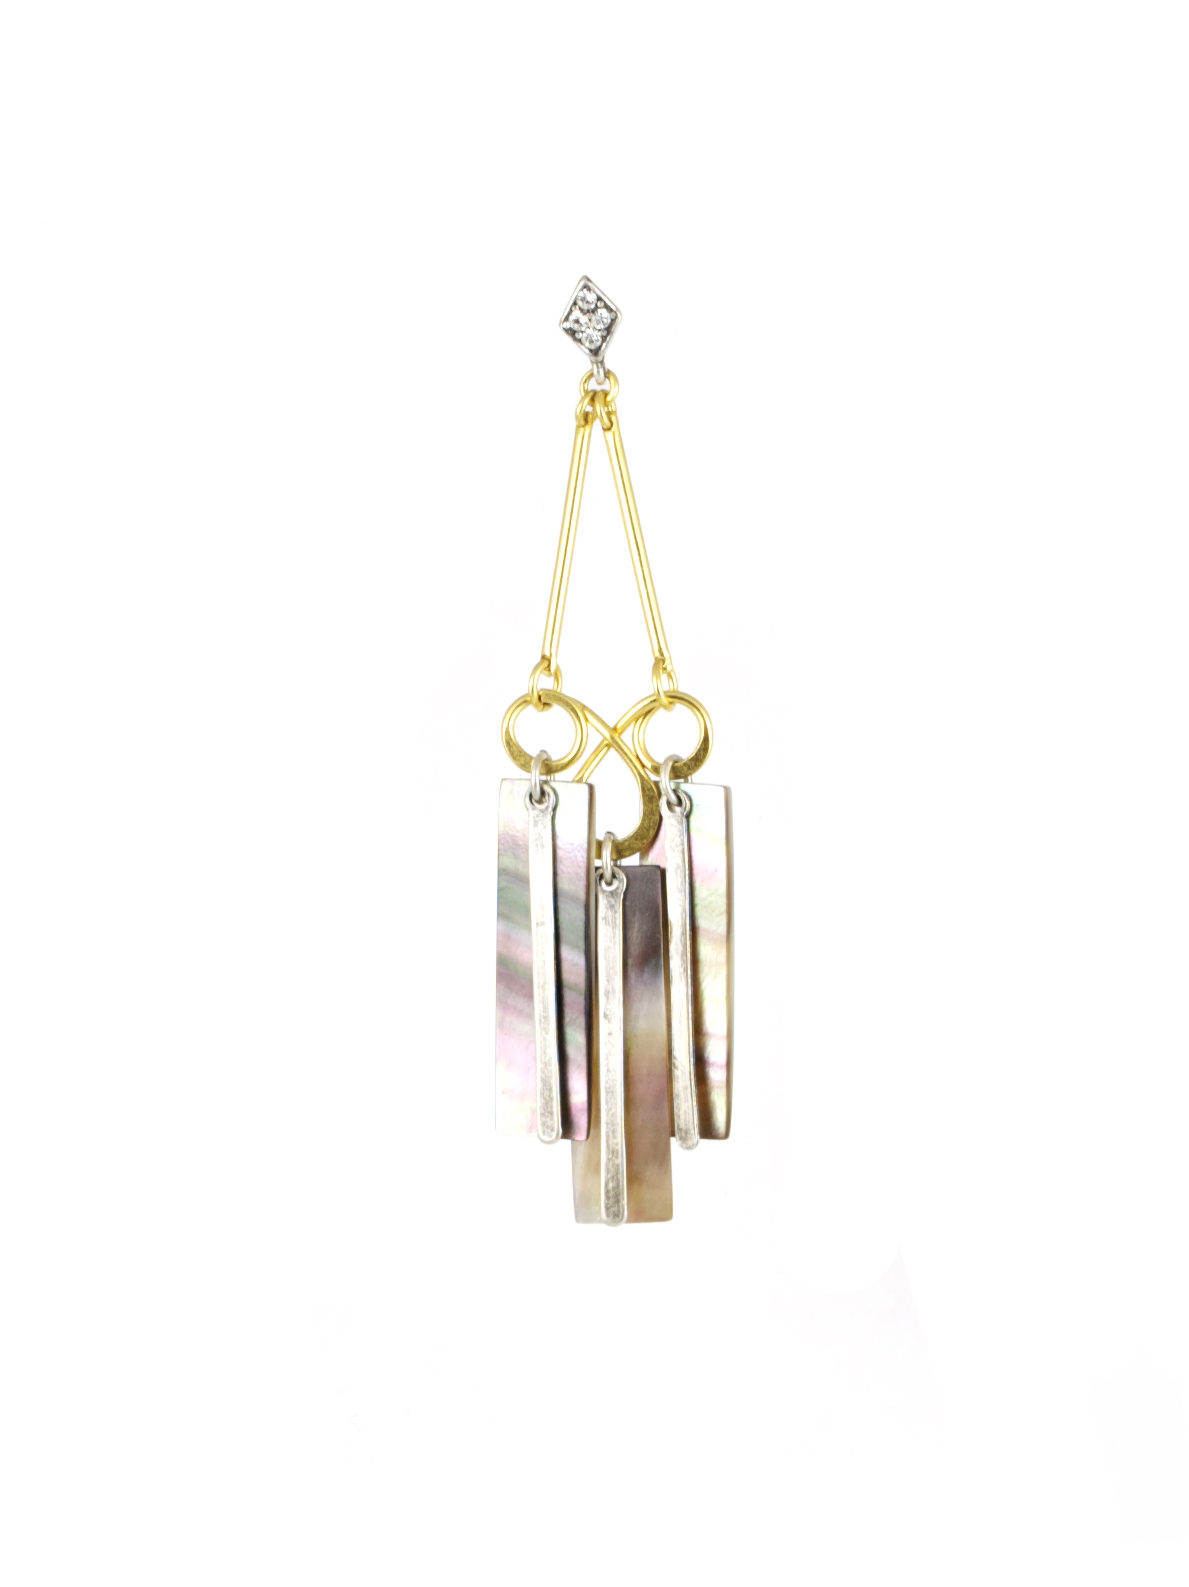  Rainbow Shower chandelier earring,  available at Gerard Yosca .&nbsp; 